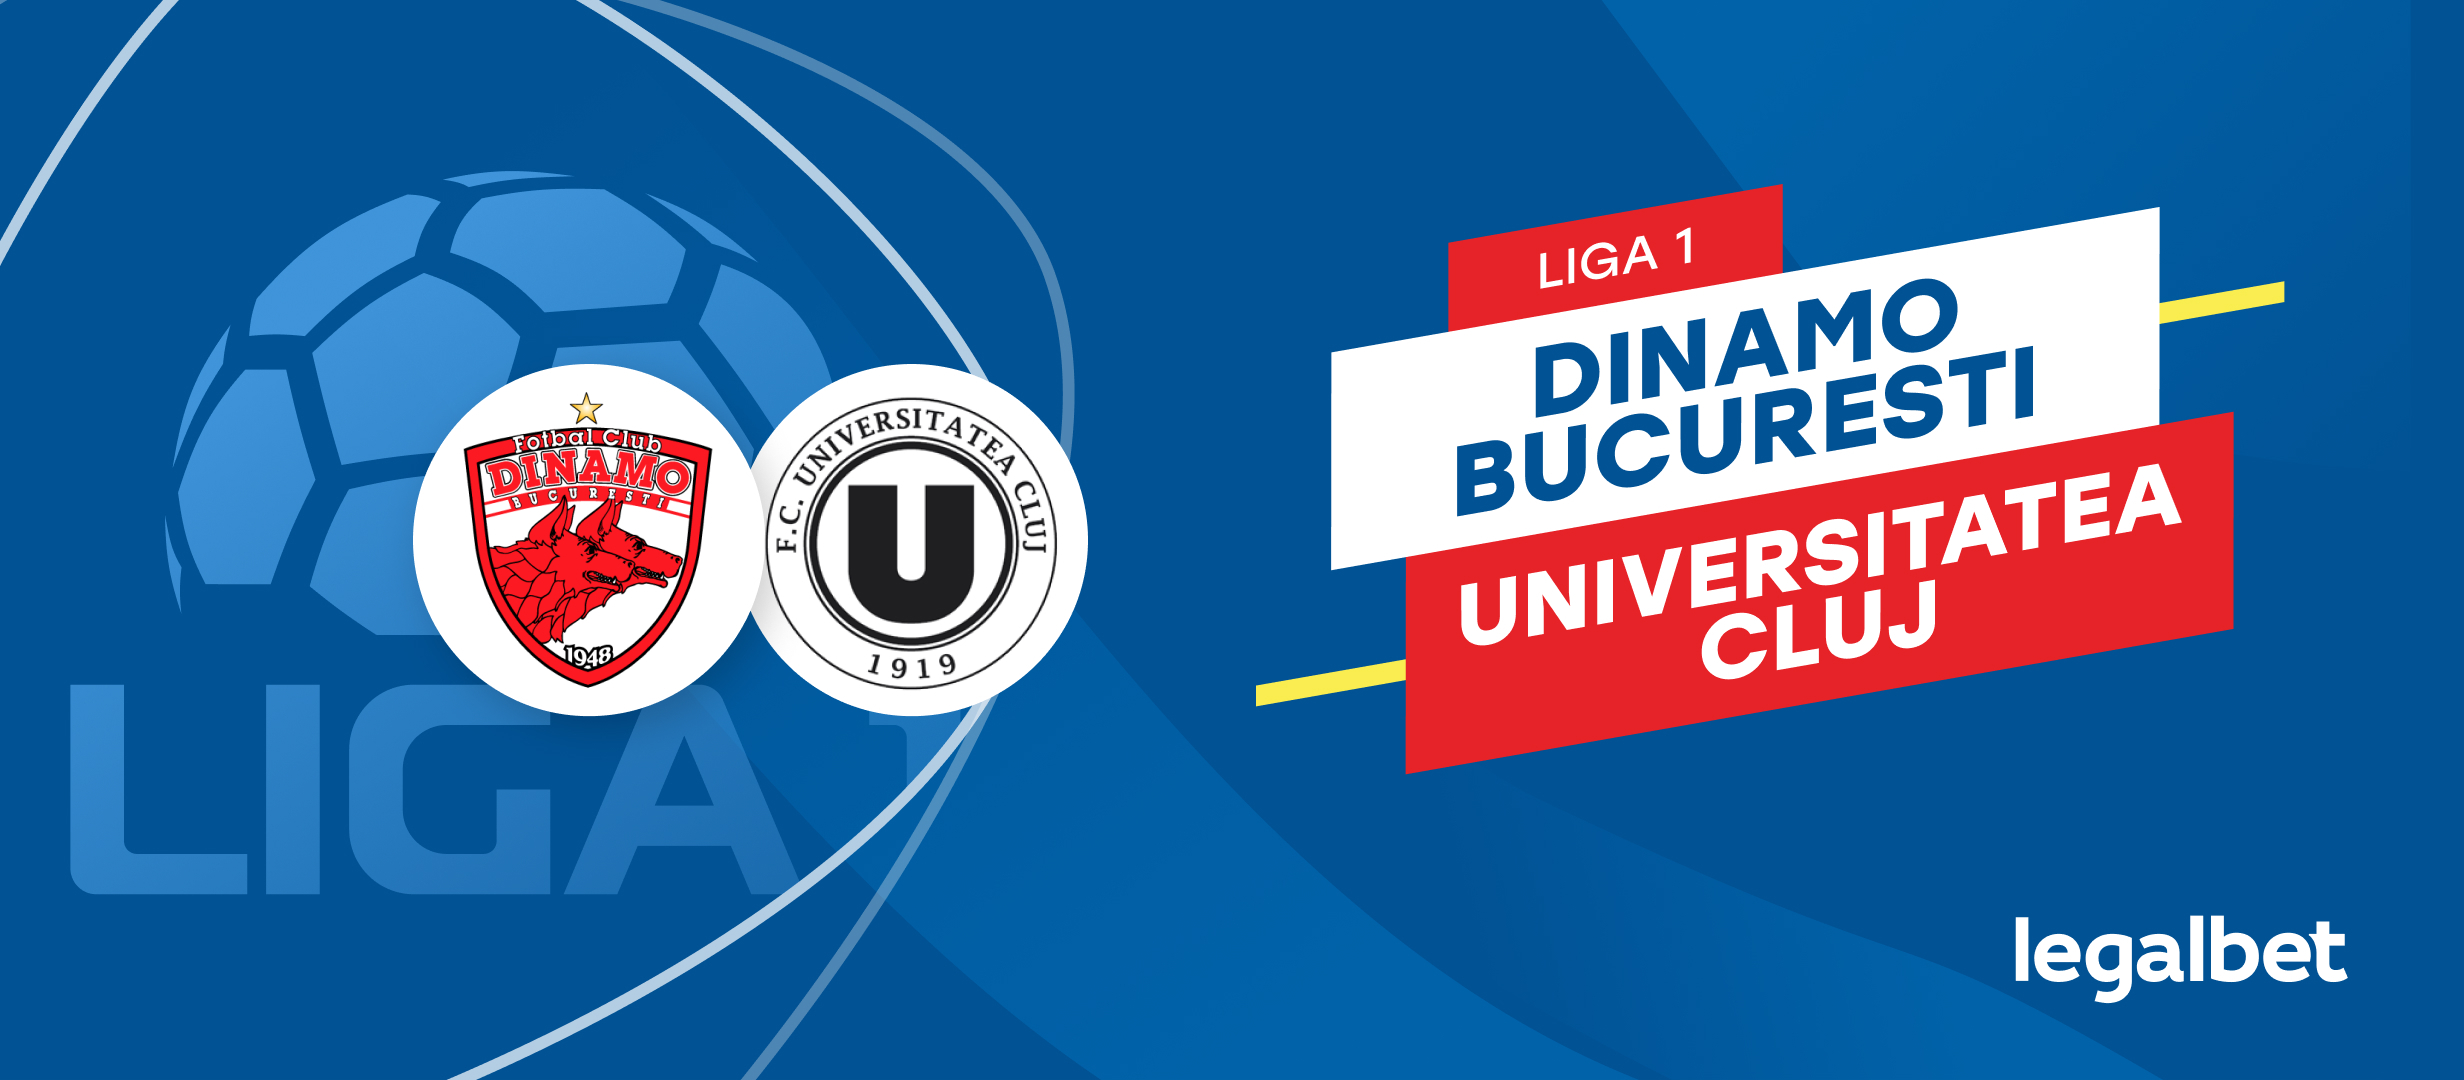 Dinamo Bucuresti - Universitatea Cluj | Cote la pariuri, ponturi si informatii